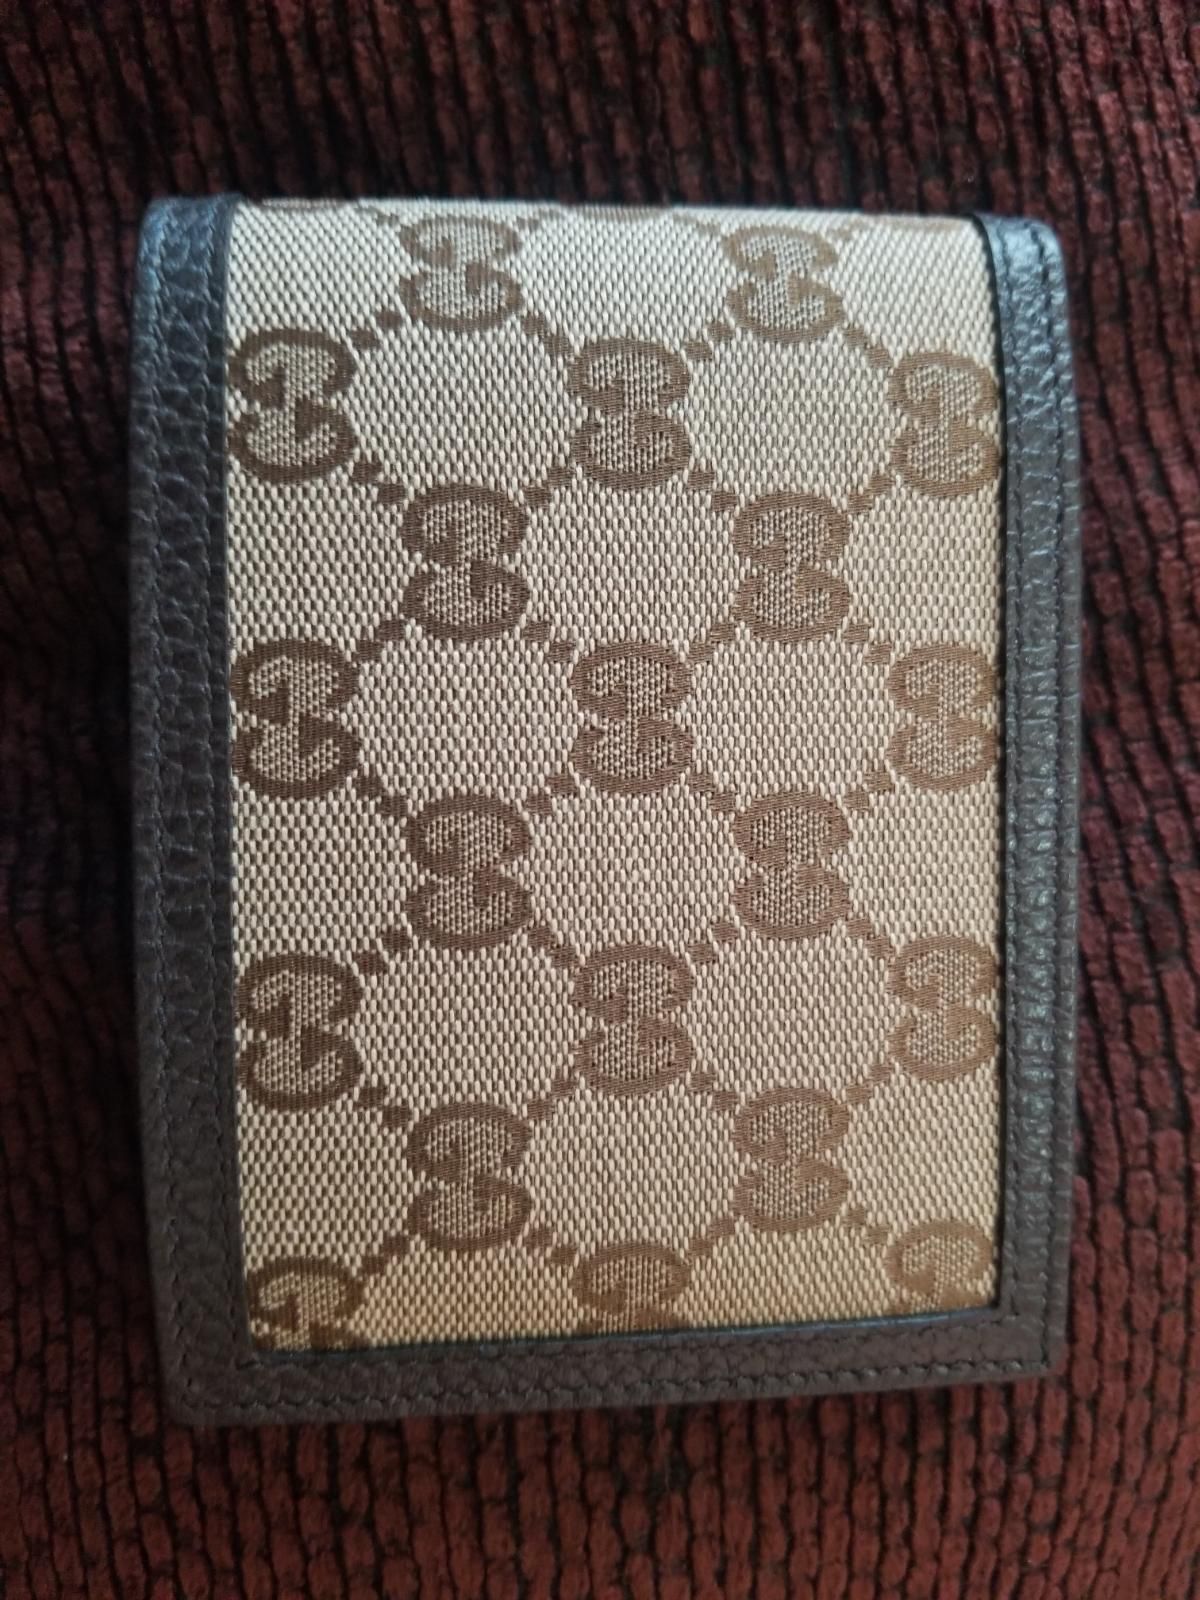 Brand new Gucci Men’s Wallet